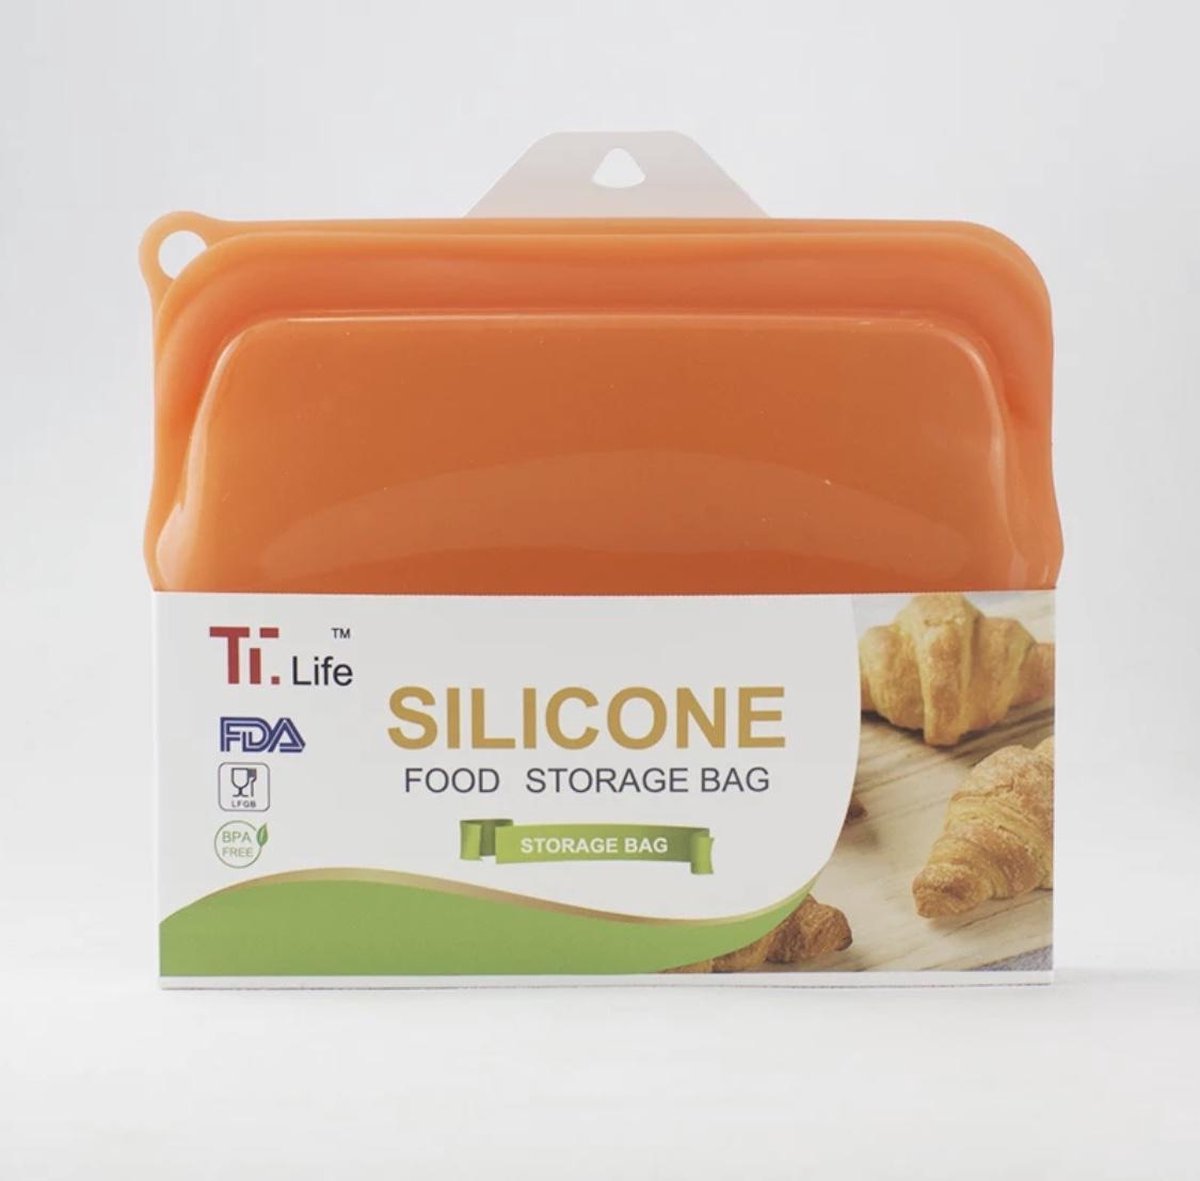 Diepvrieszakjes - Hersluitbare Zakjes - Siliconen Vershoudzakken - Herbruikbare Zakjes - Oranje - 1960 ml